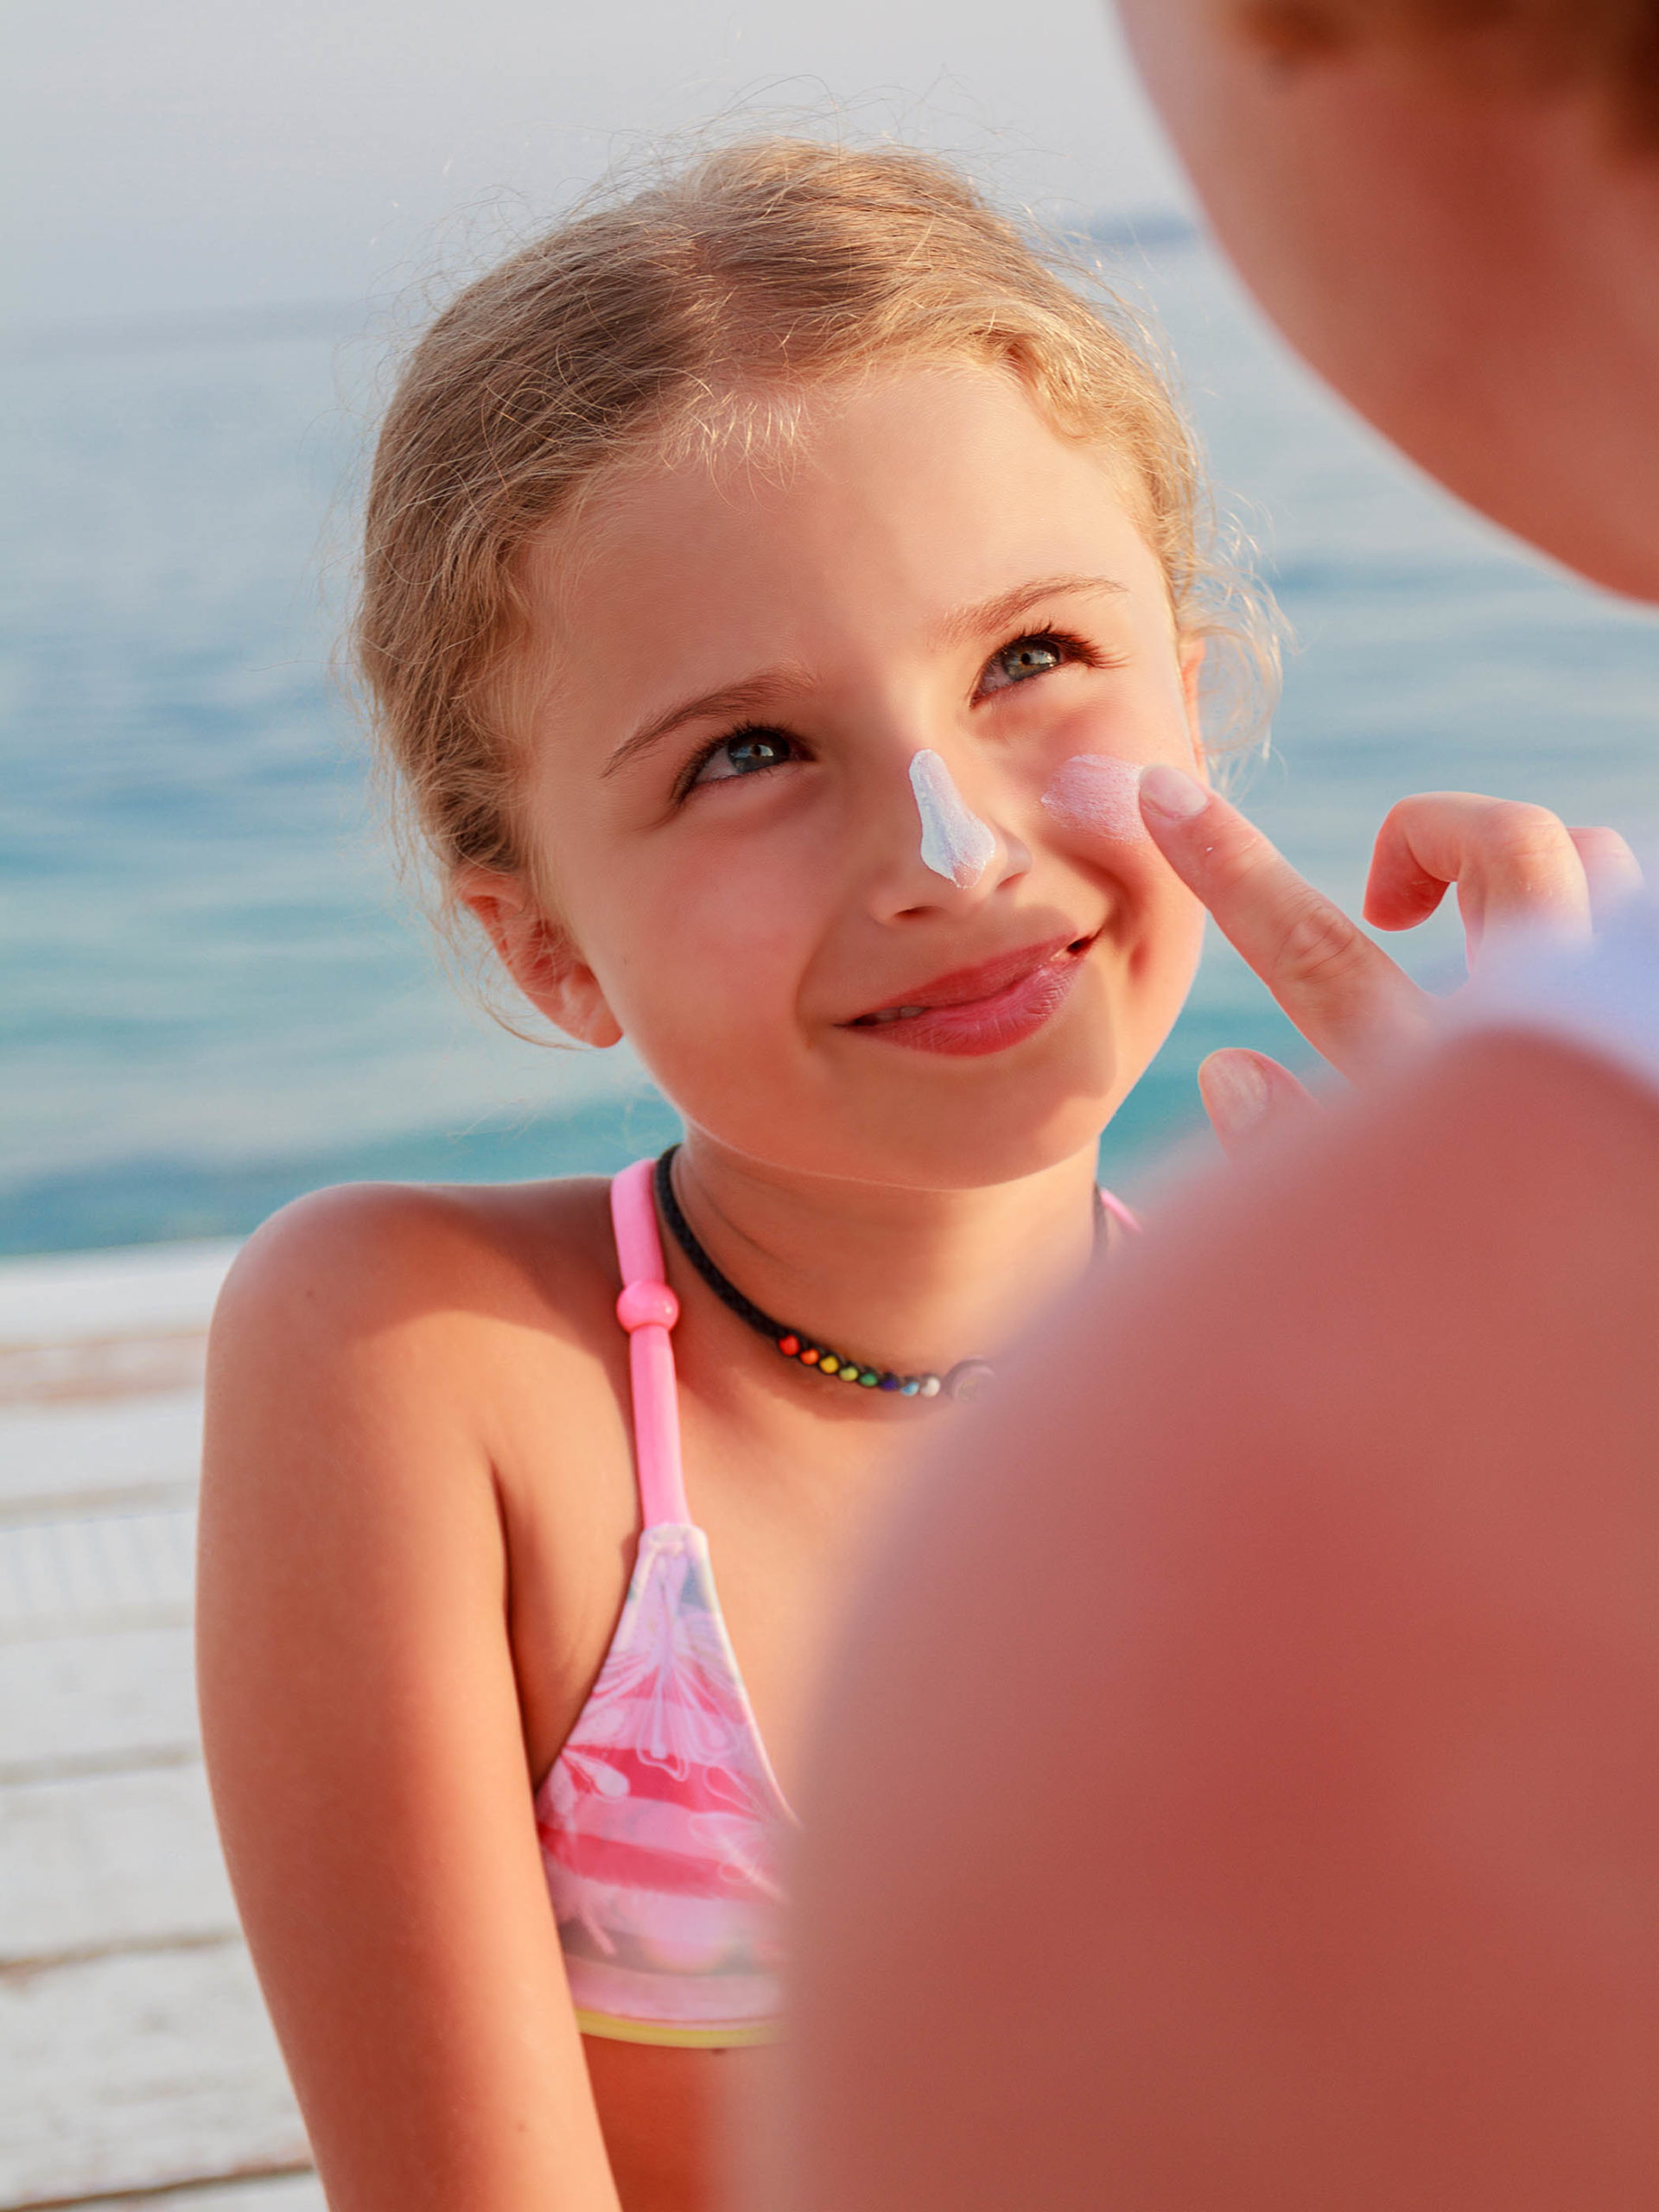 Skin reactions to the sun - CHOC - Children's Health